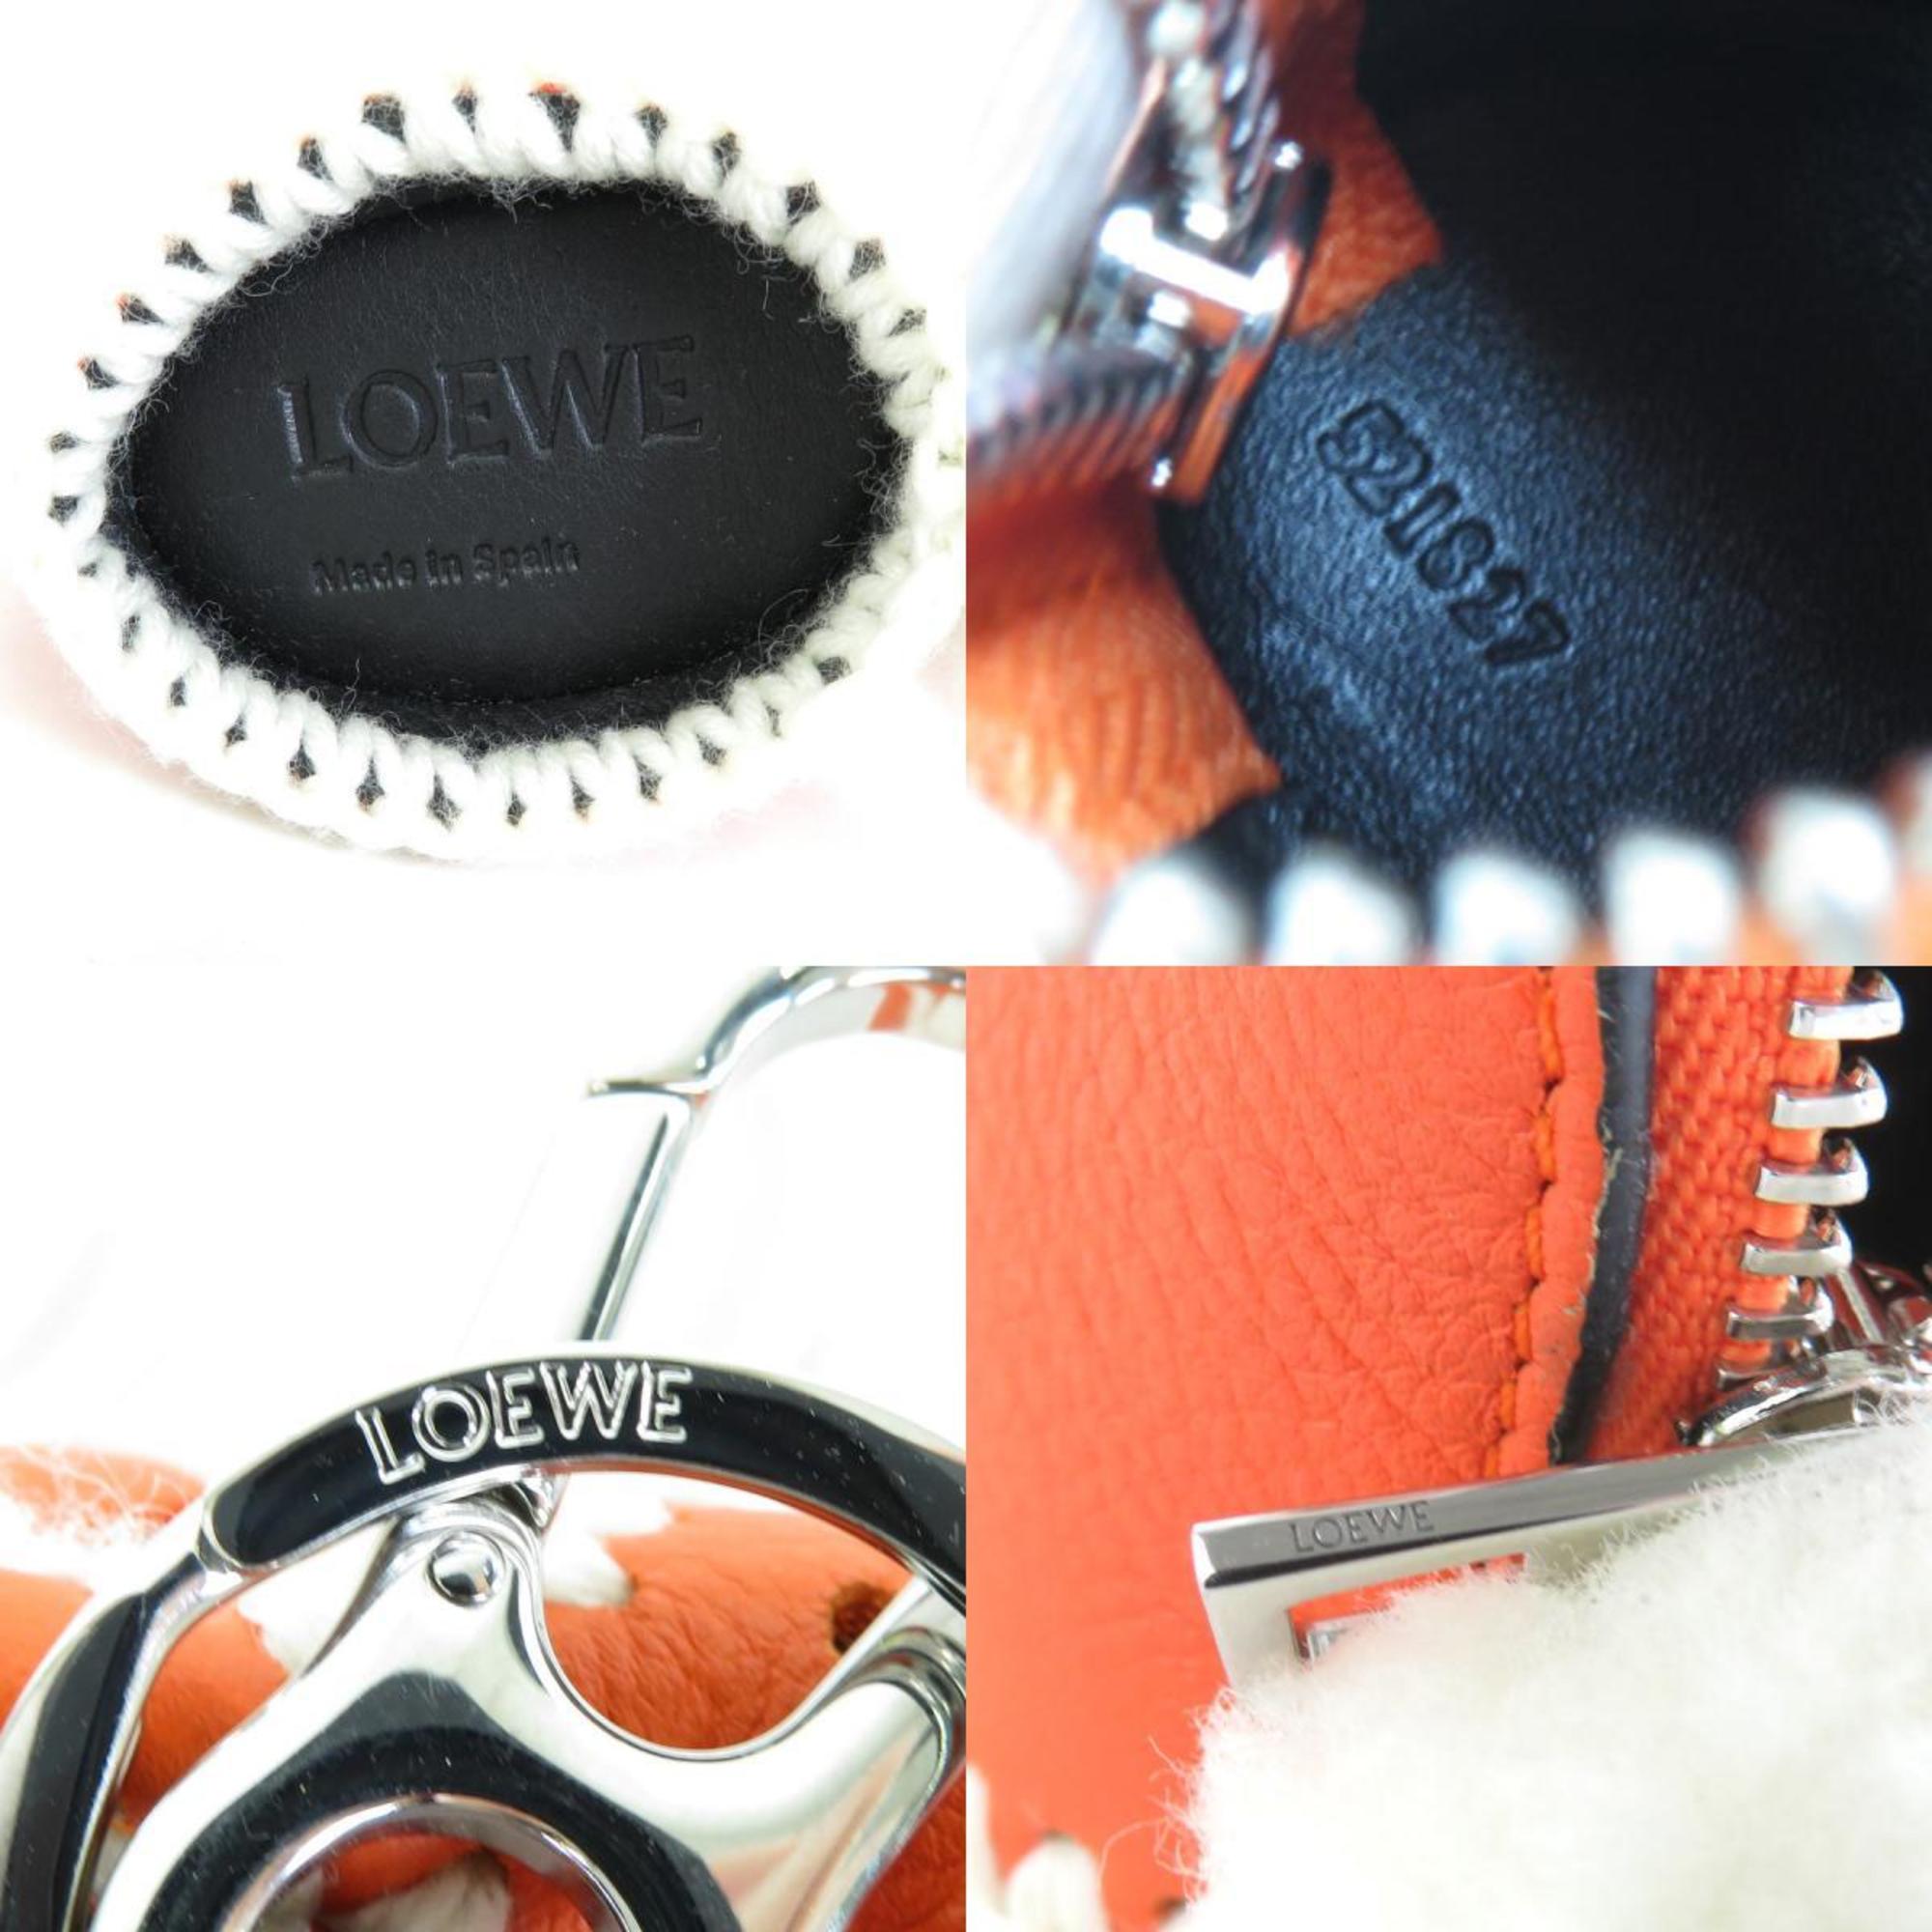 Loewe LOEWE Charm Coin Case Bunny Macrame Leather/Wool/Metal Orange/White/Silver Women's